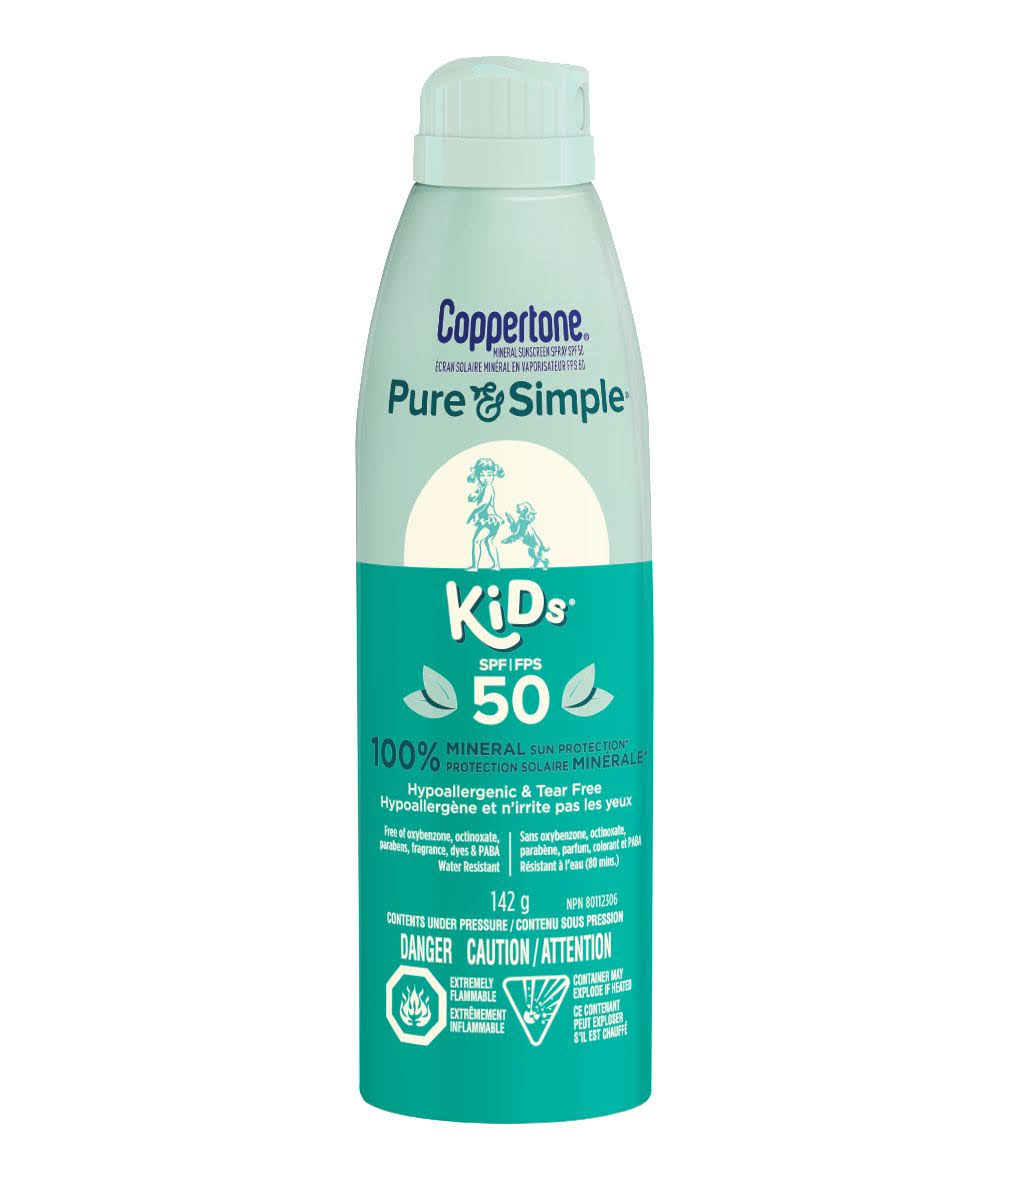 Coppertone Mineral Sunscreen Spray Pure & Simple Kids Spf 50 142g